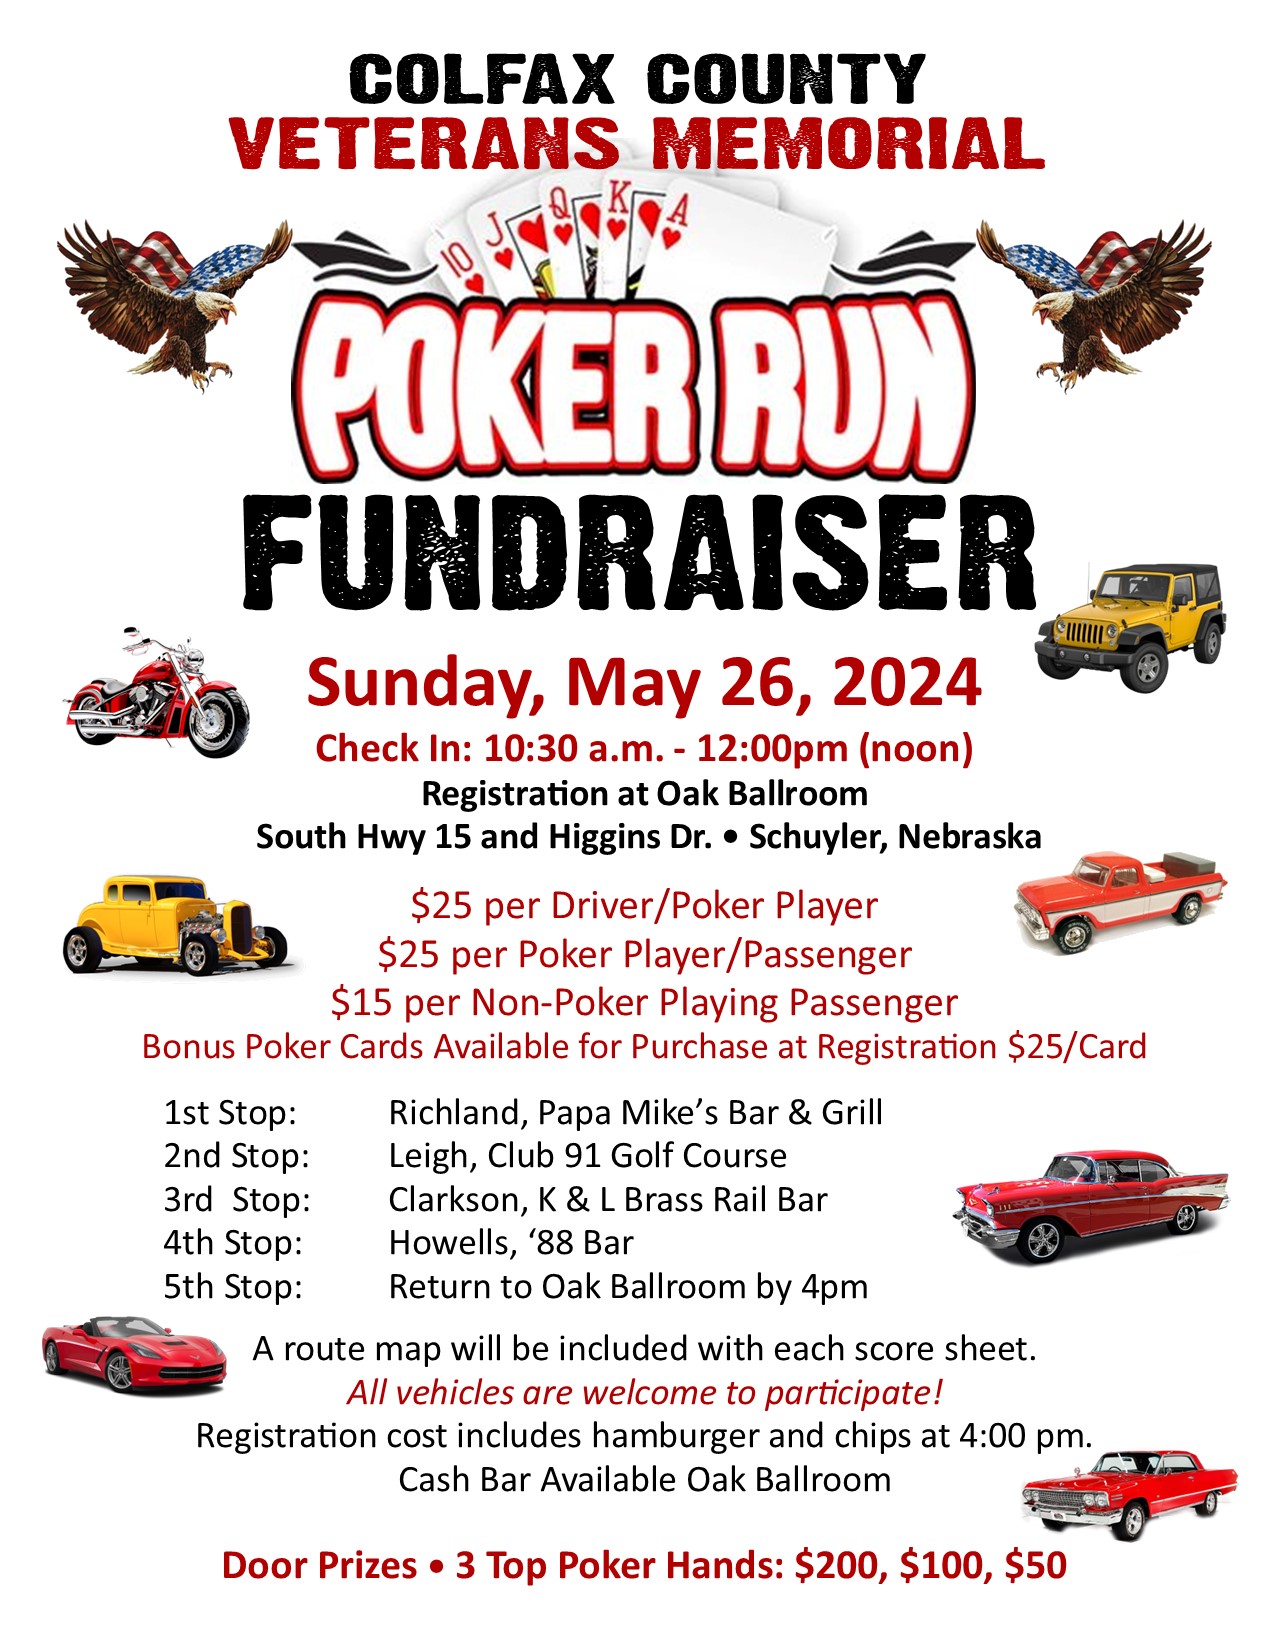 Colfax County Veterans Memorial – Poker Run Fundraiser